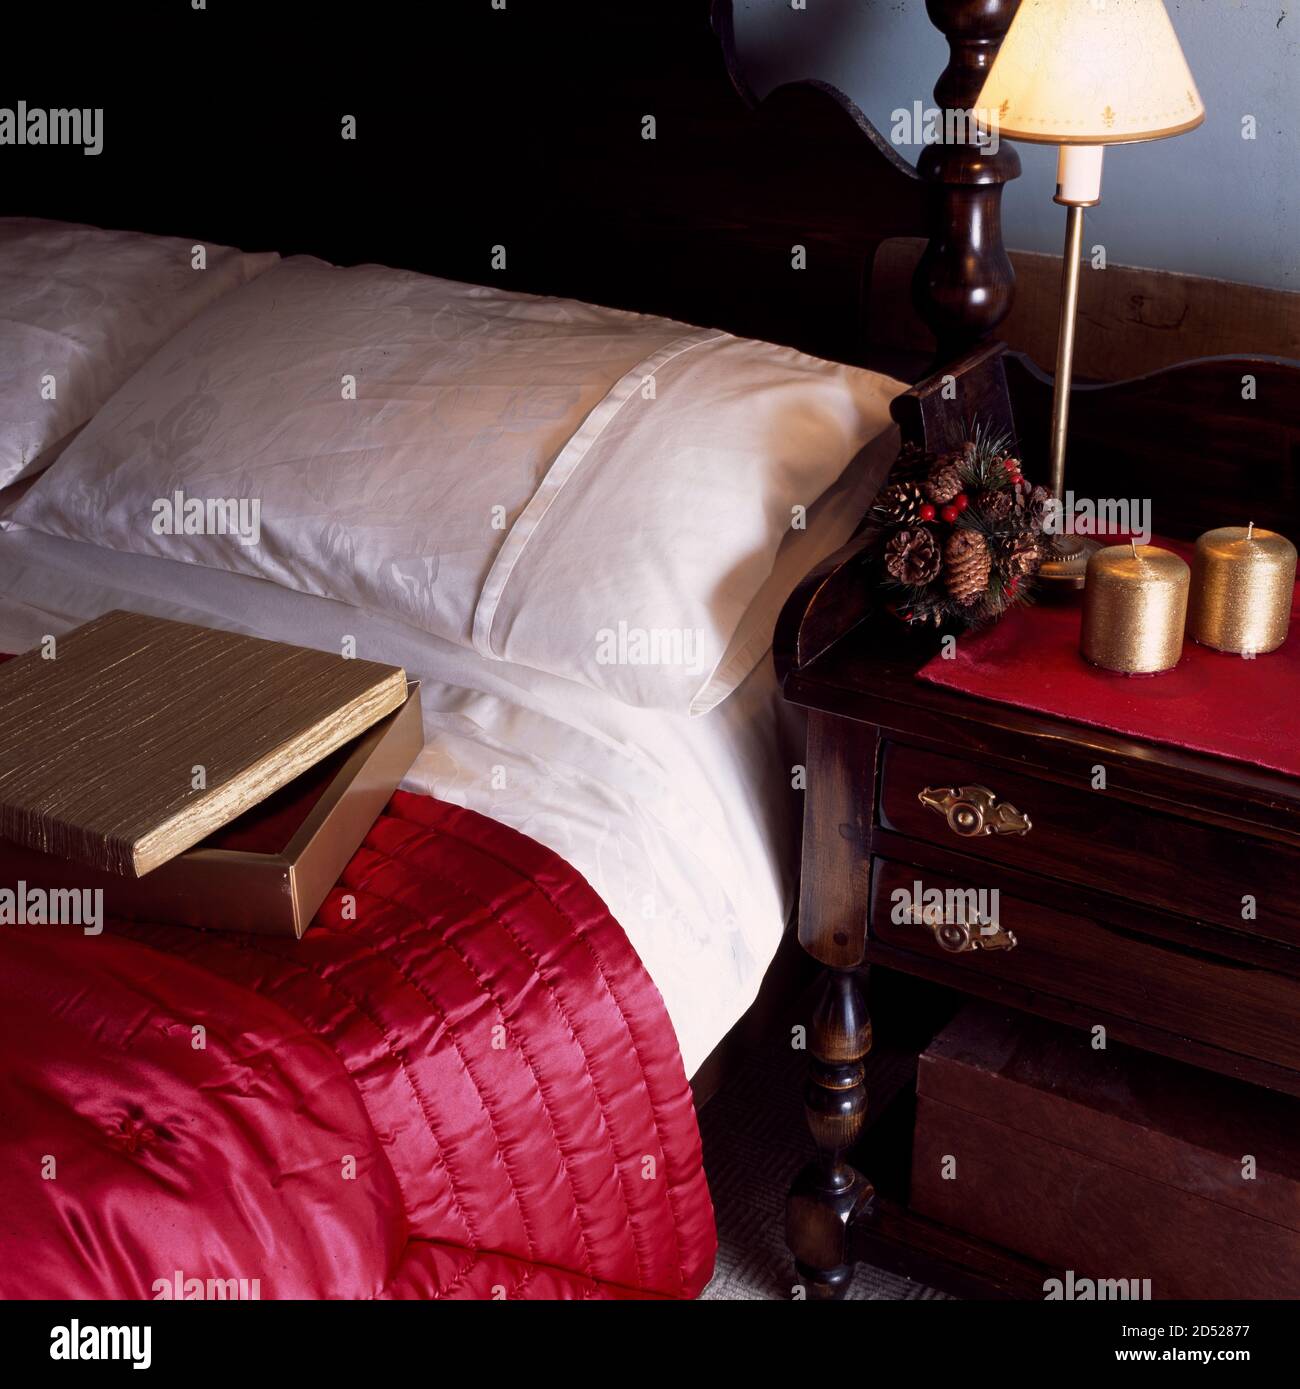 Bunk bed in luxury cabin cruiser Stock Photo